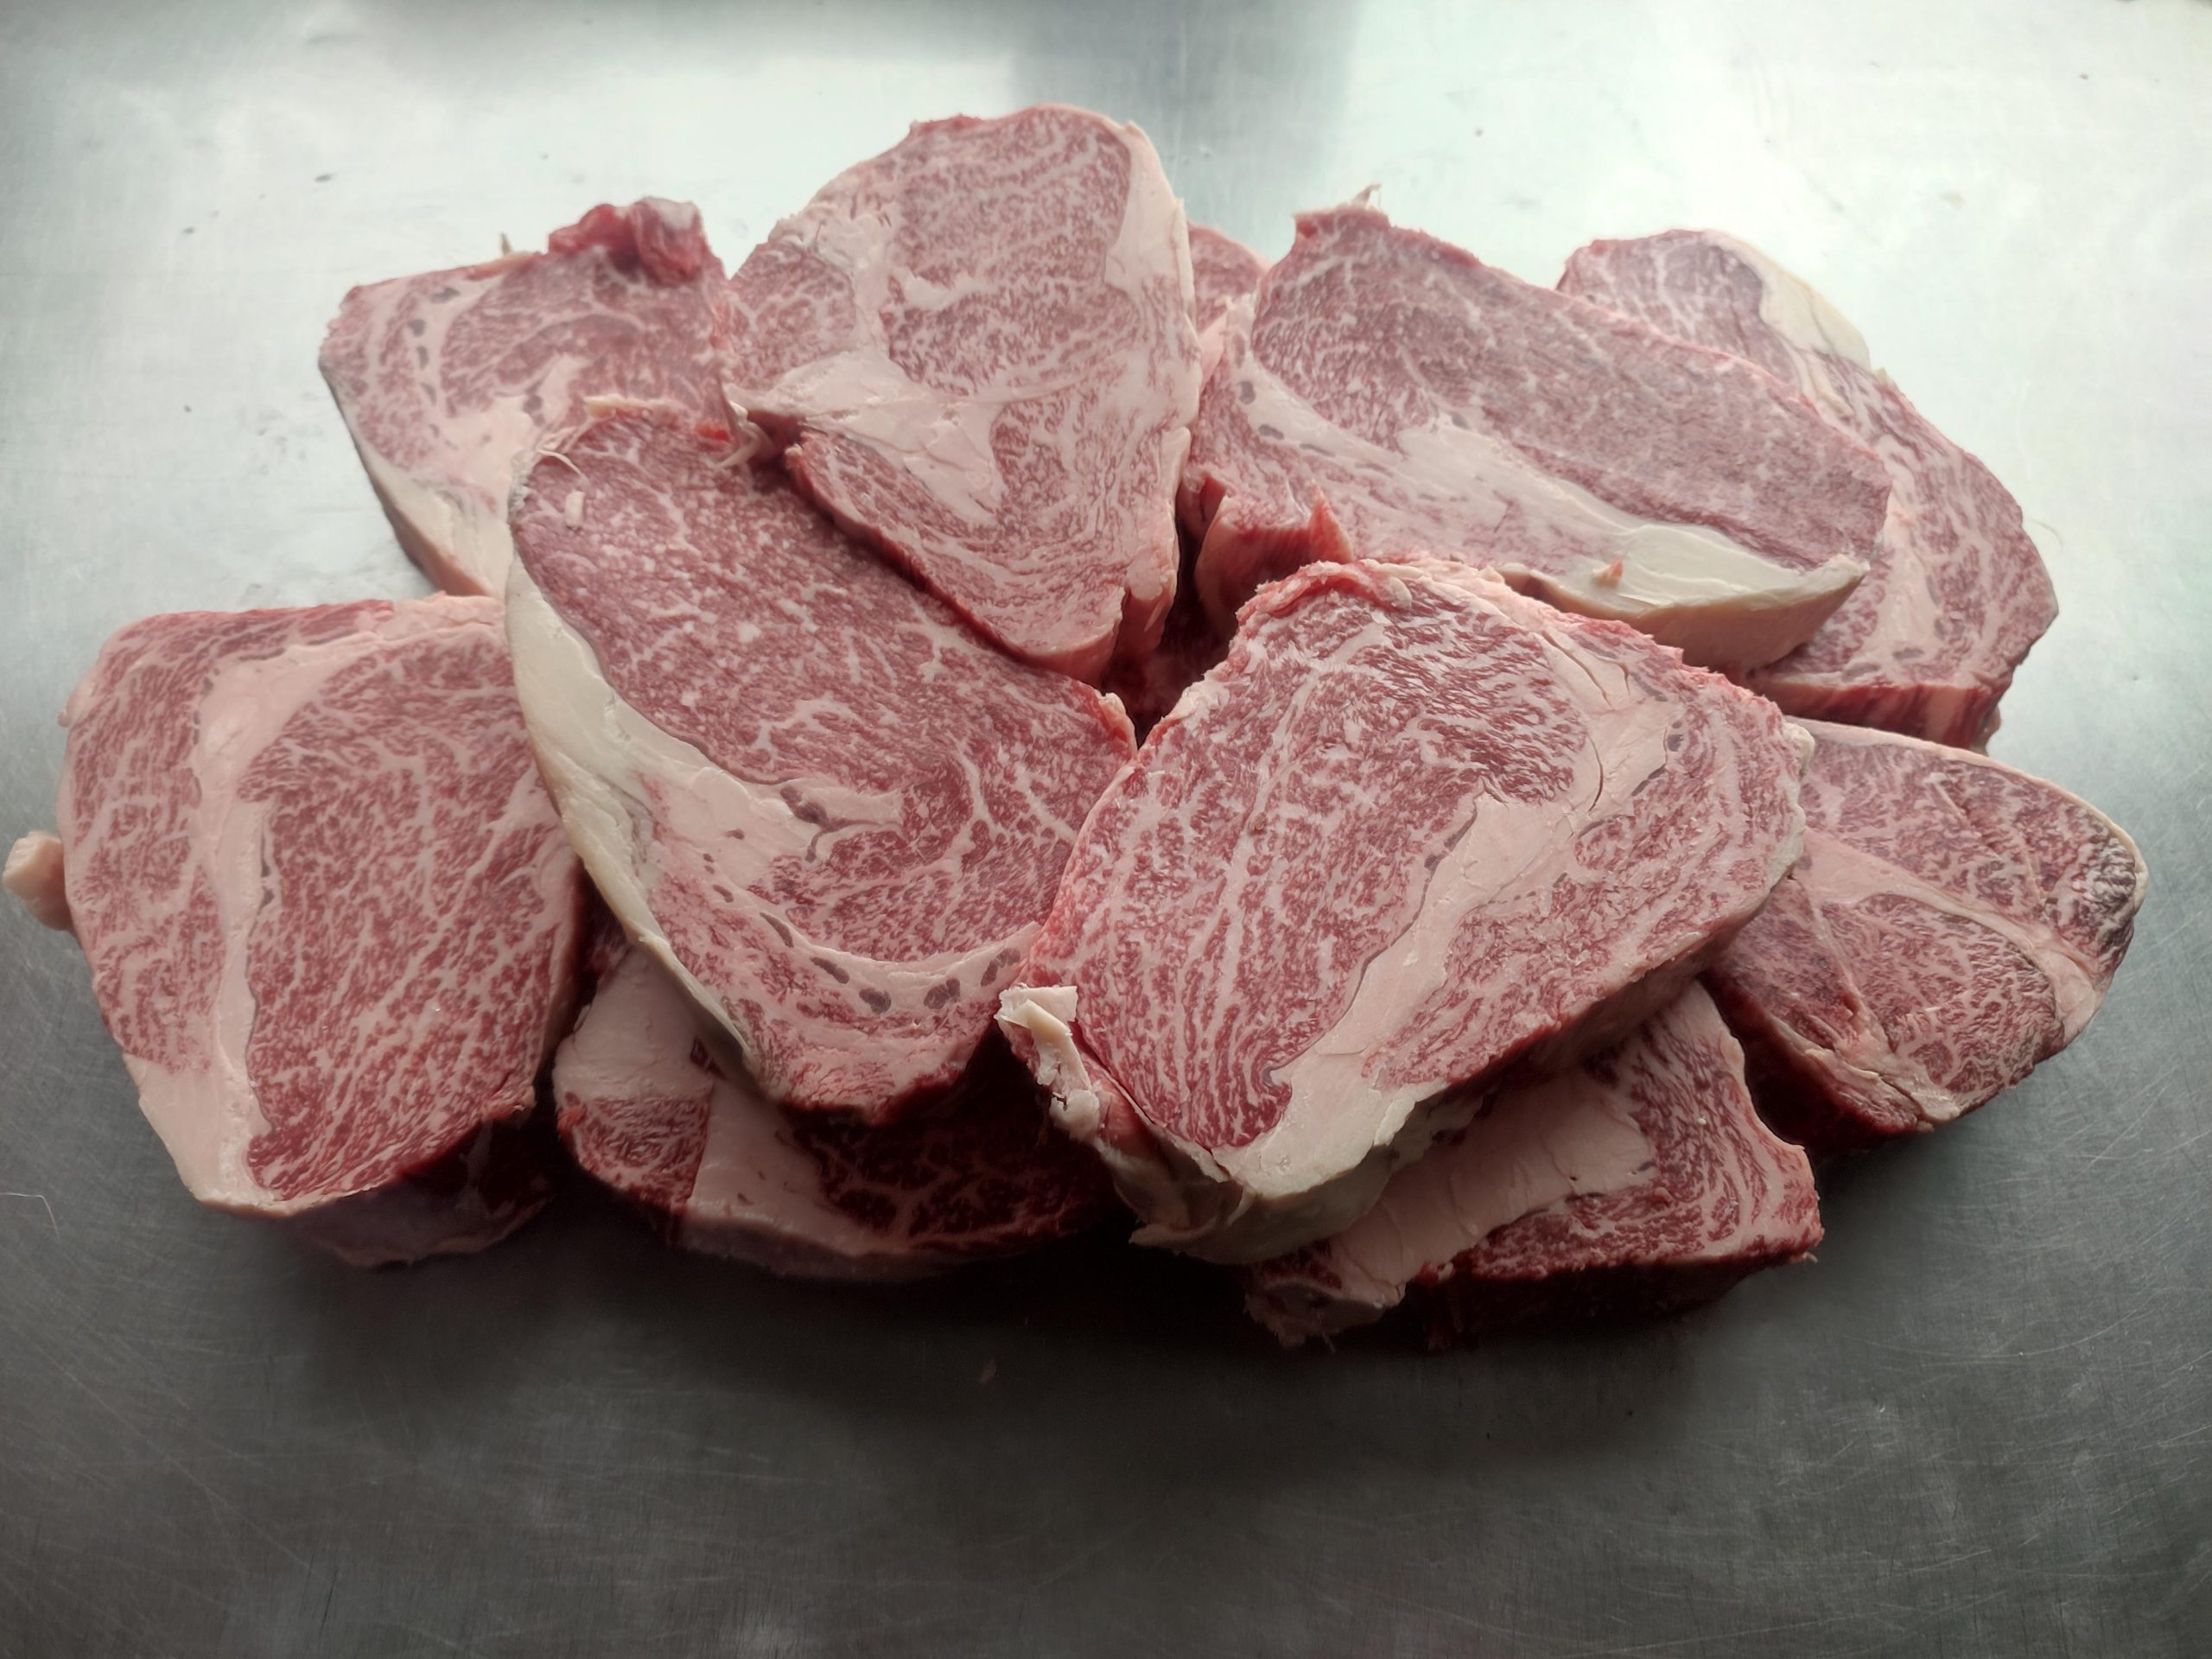 Prime Cuts: Exploring the World of Ribeye Steaks